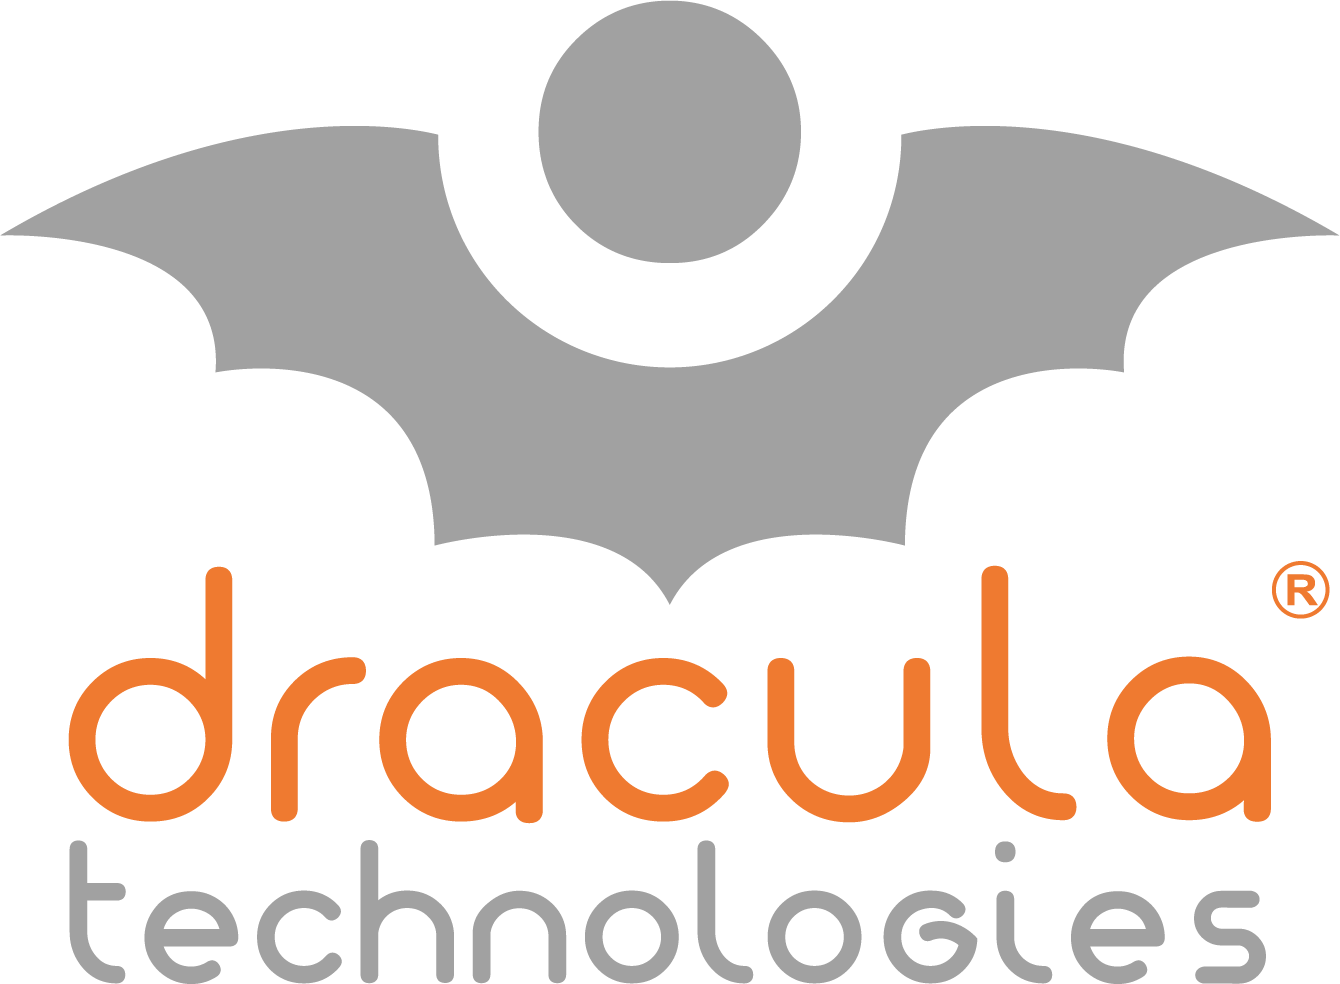 Logo Dracula Technologies